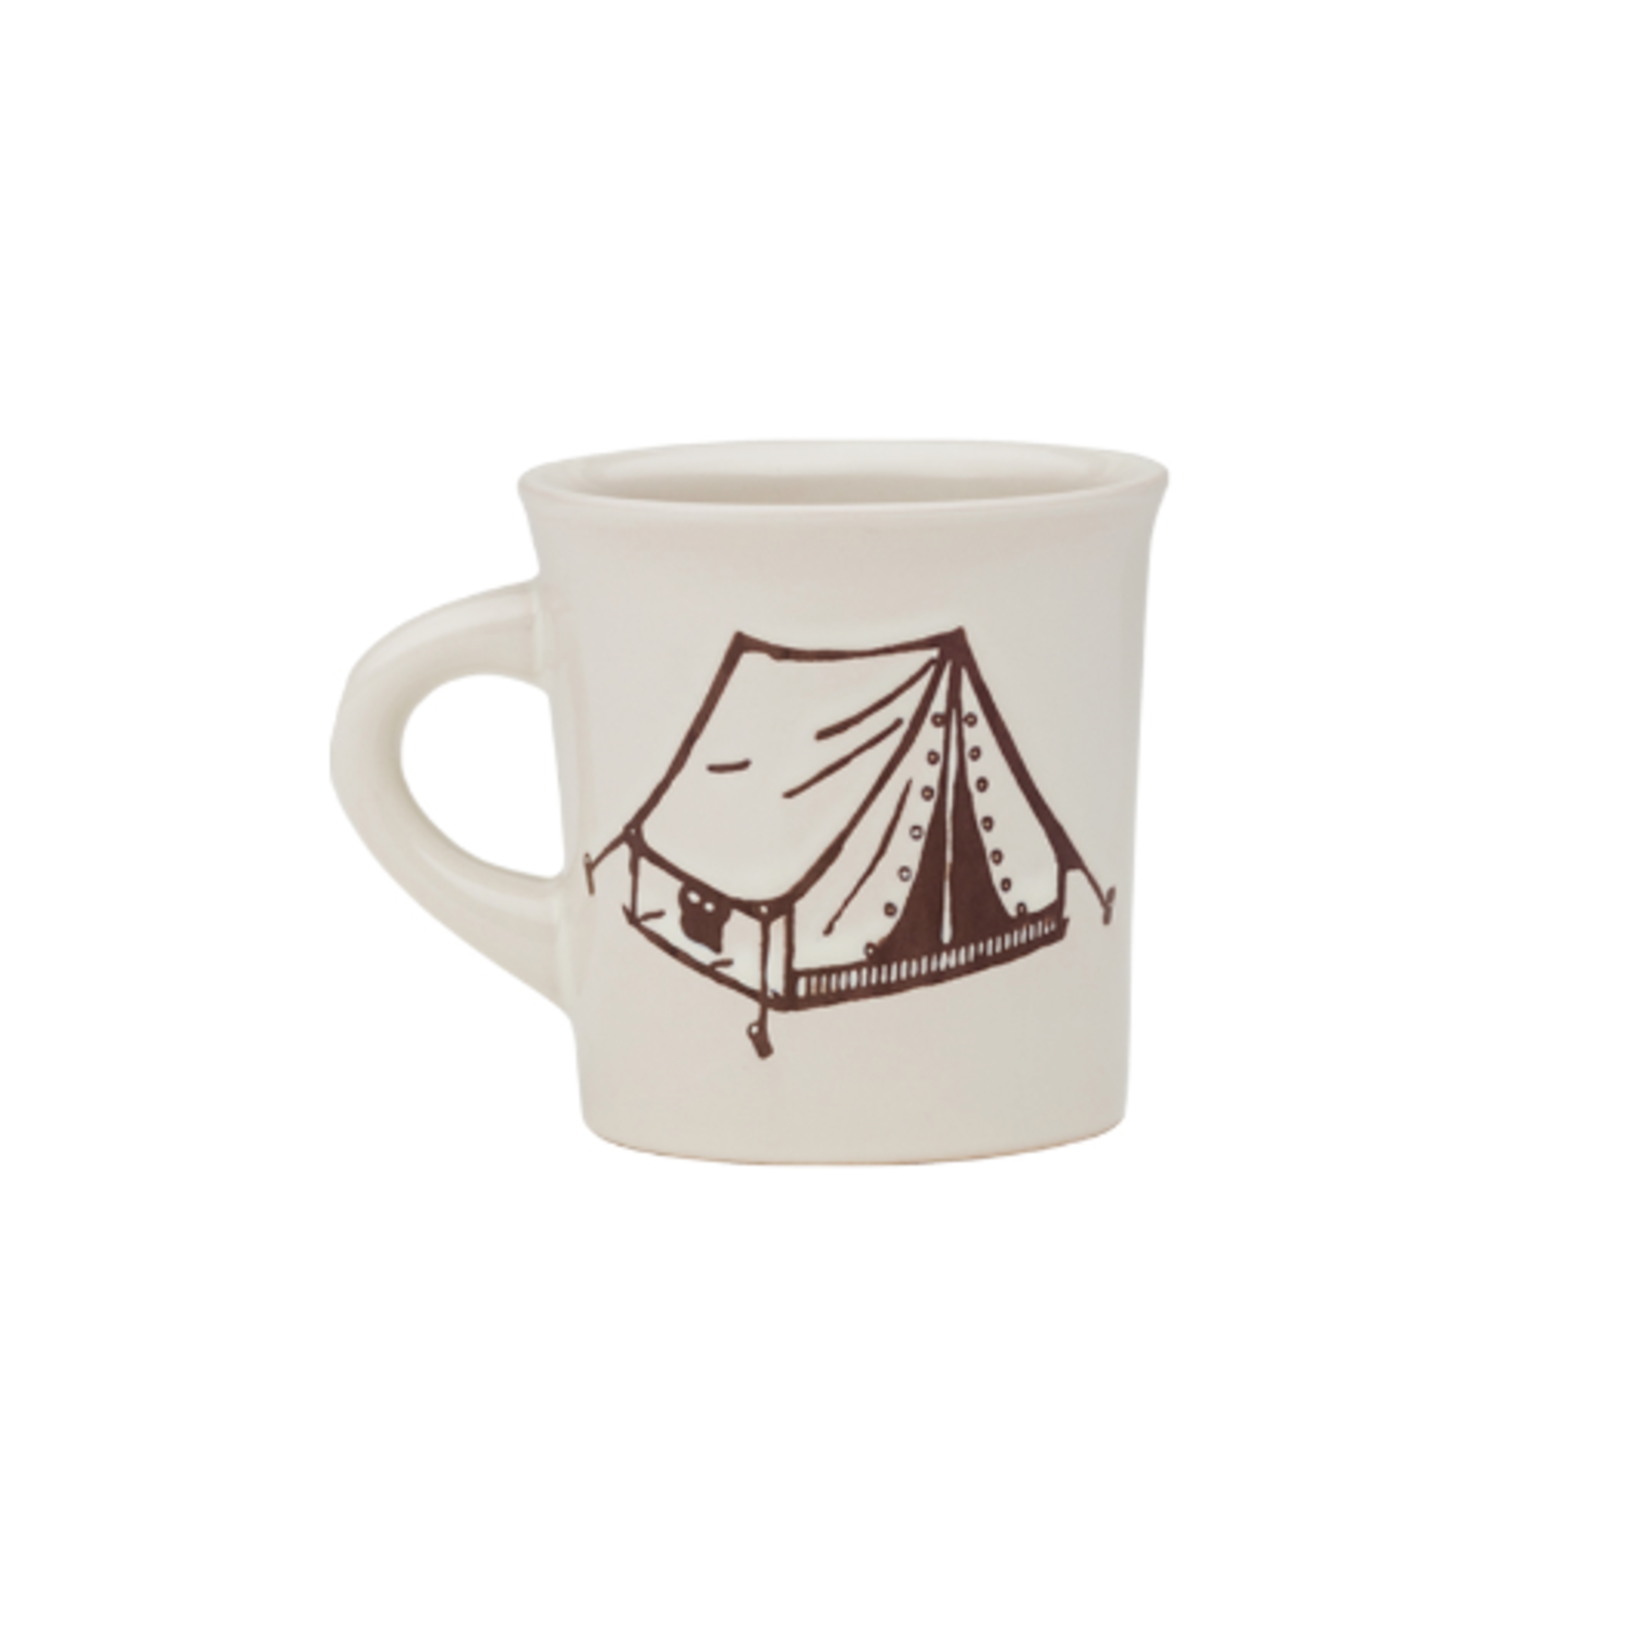 ORE Originals Cuppa This Cuppa Mug, Tent